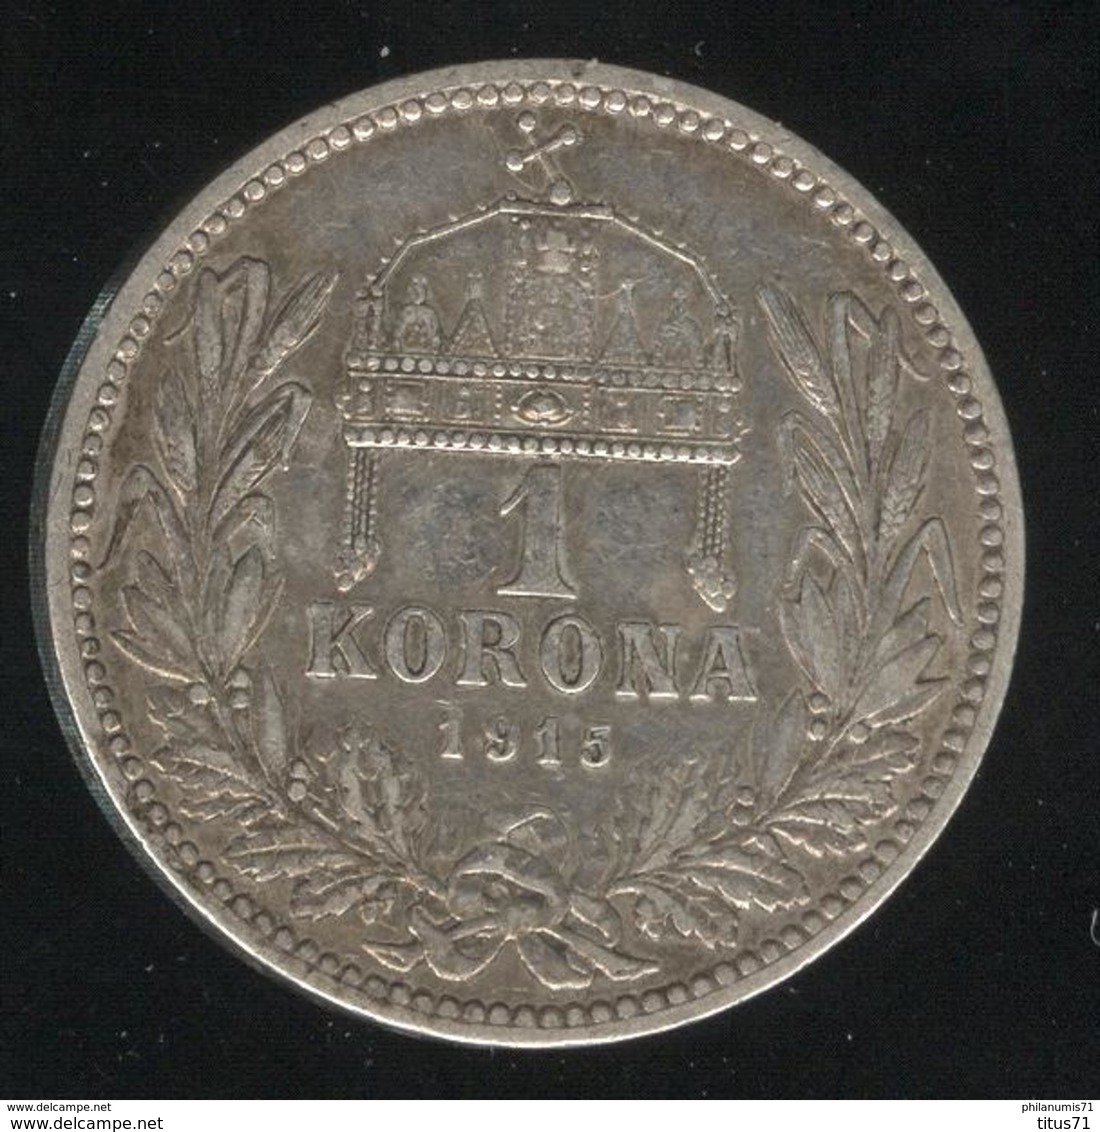 1 Korona Autriche / Austria 1915 - Argent / Silver - TTB+ - Austria